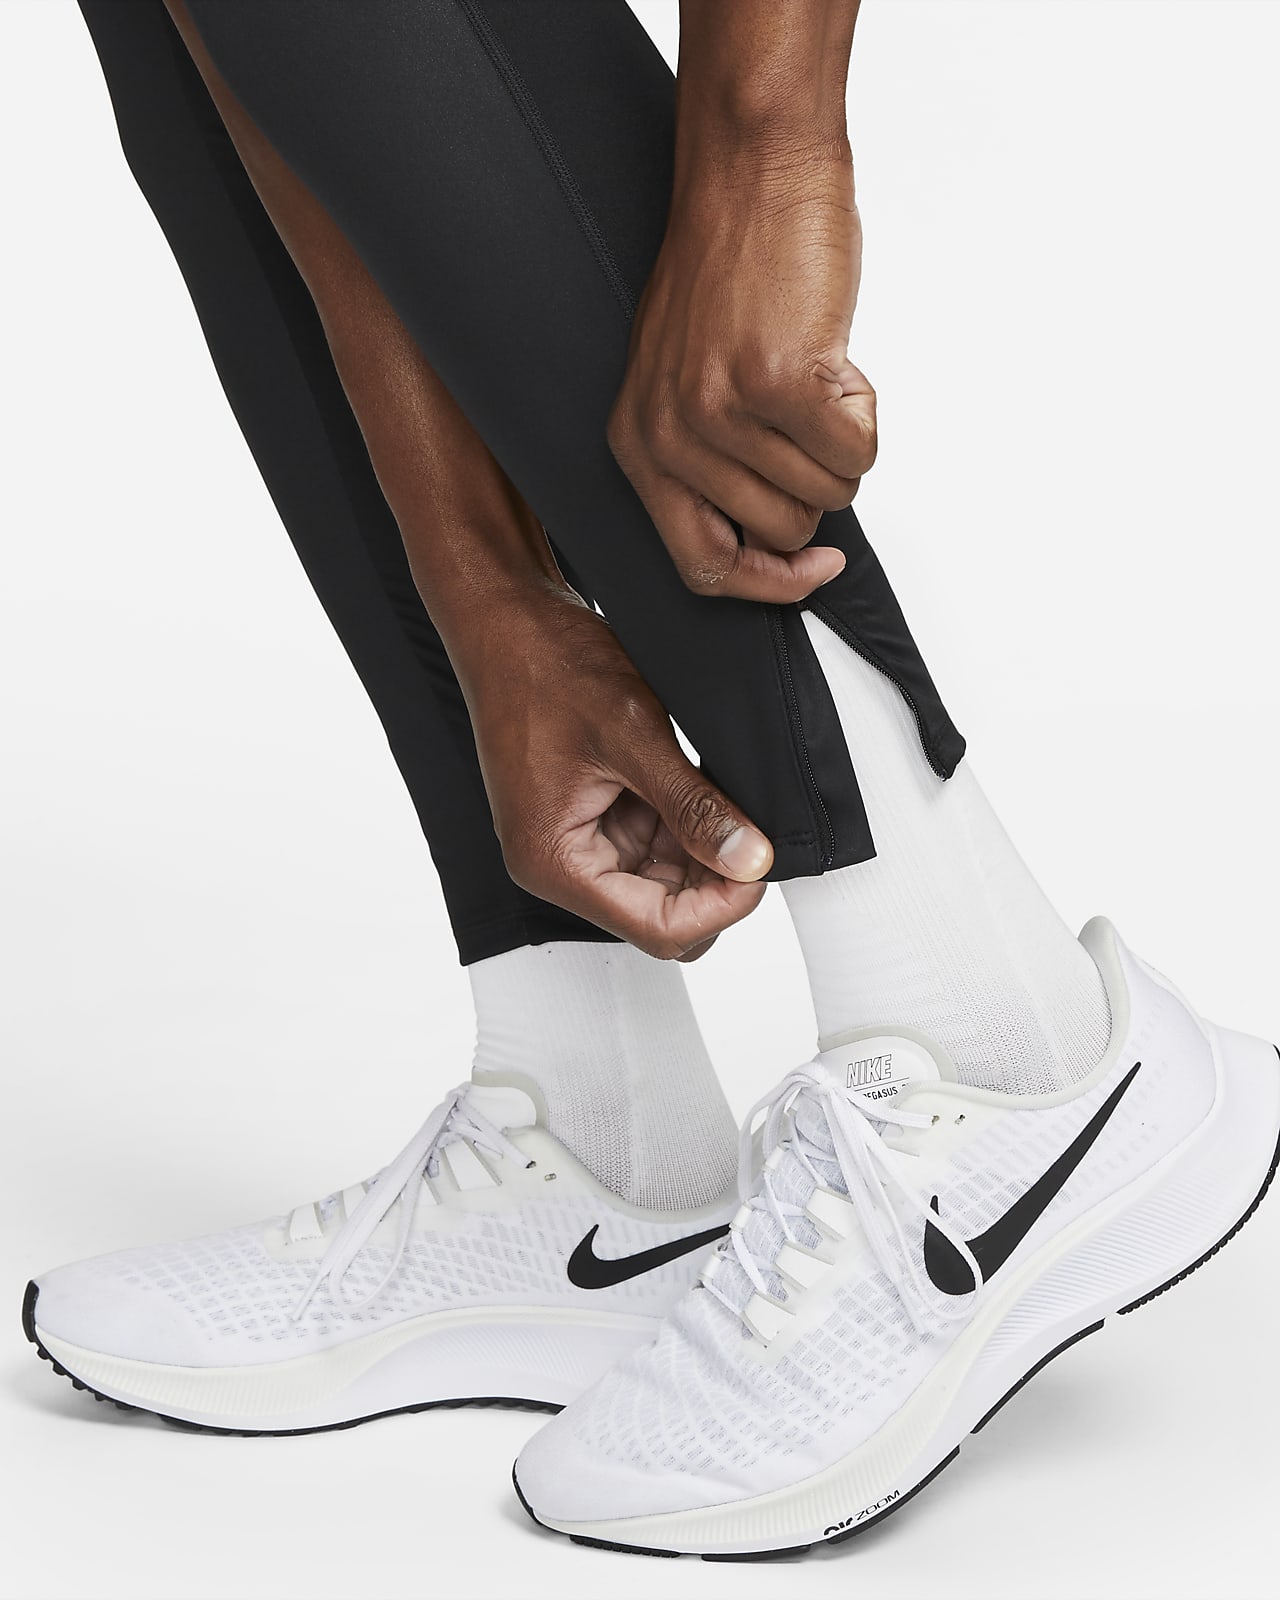 Nike Running tights PHENOM ELITE in black